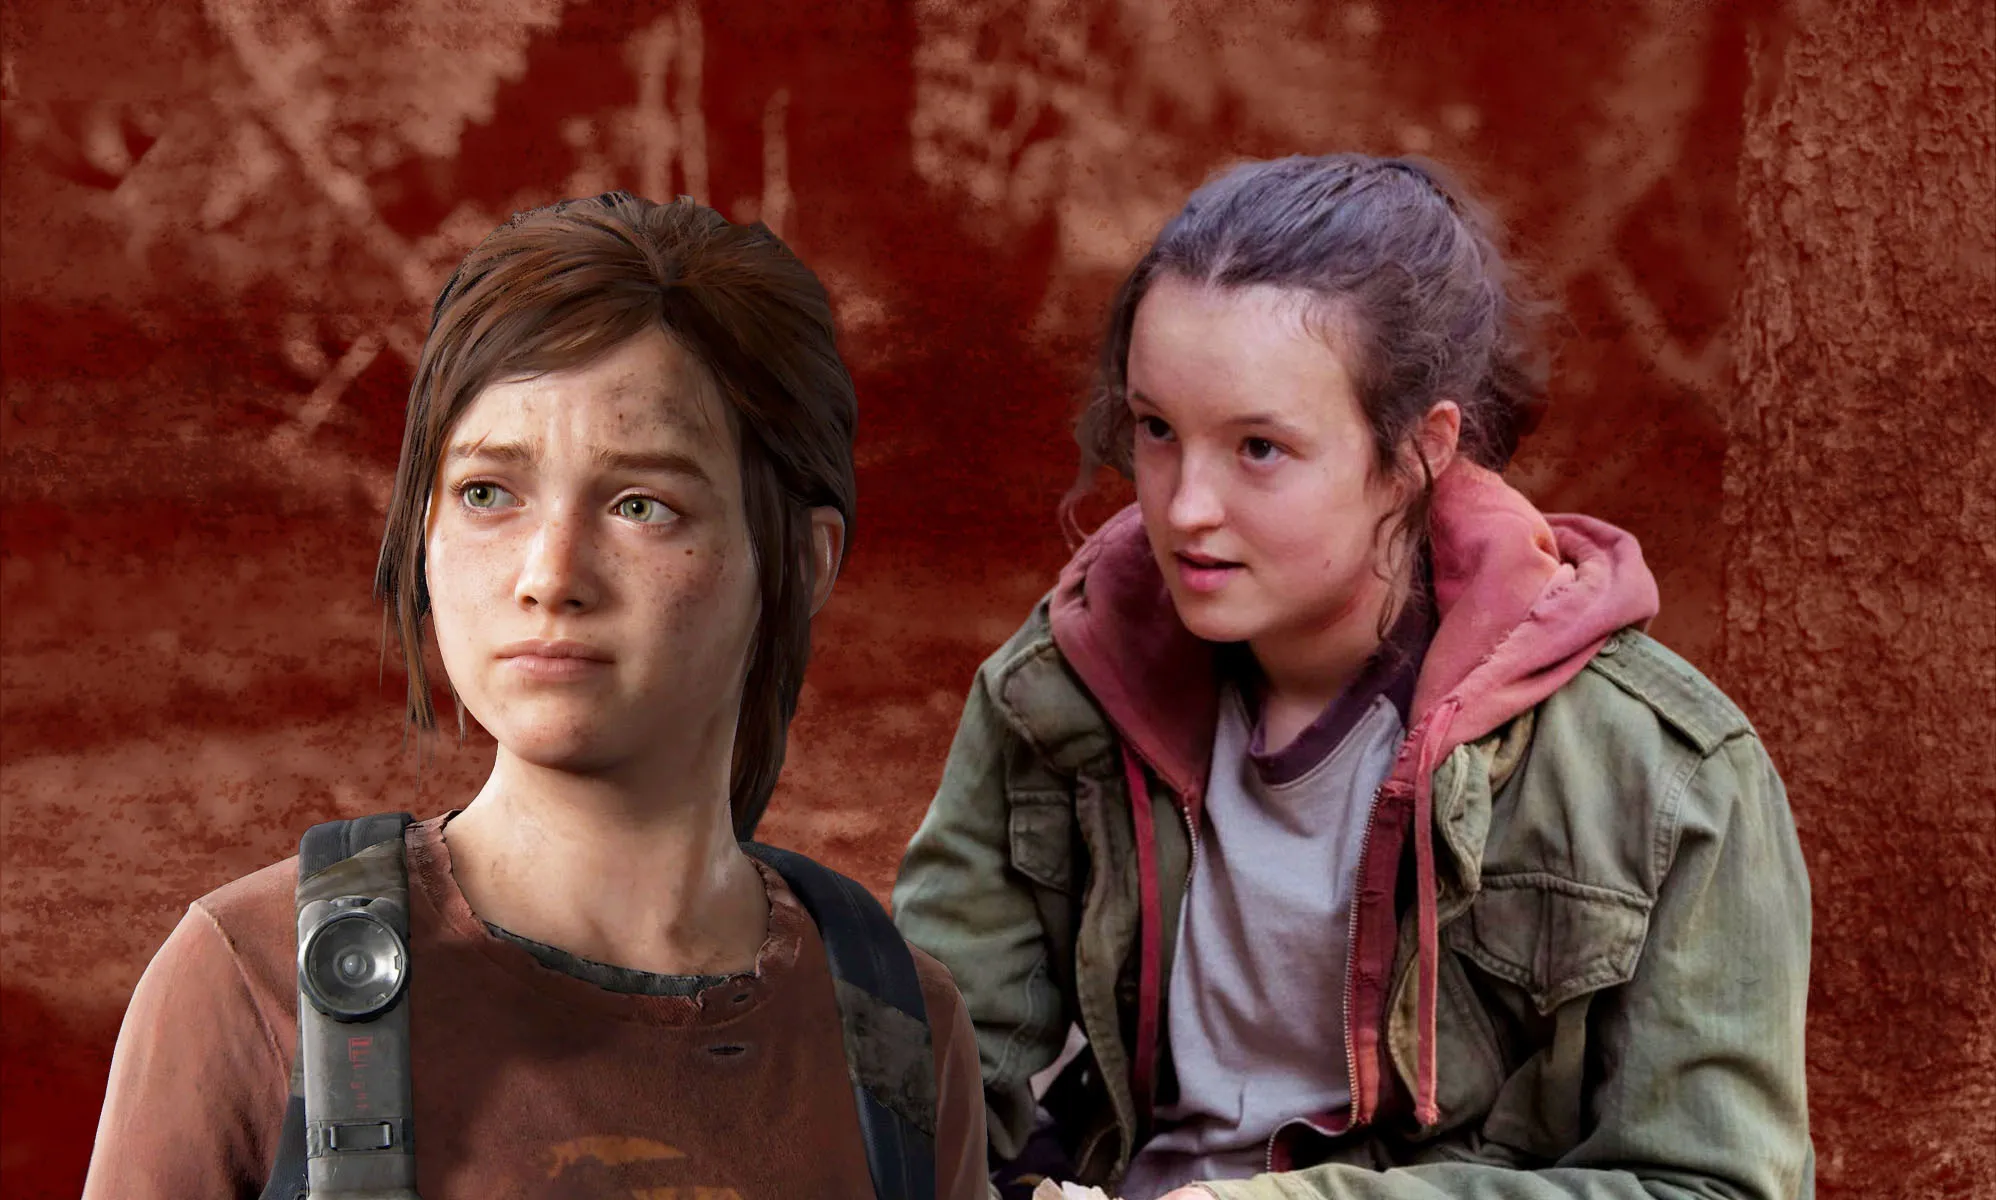 Do you prefer Ellie in part 1 or in part 2? : r/thelastofus